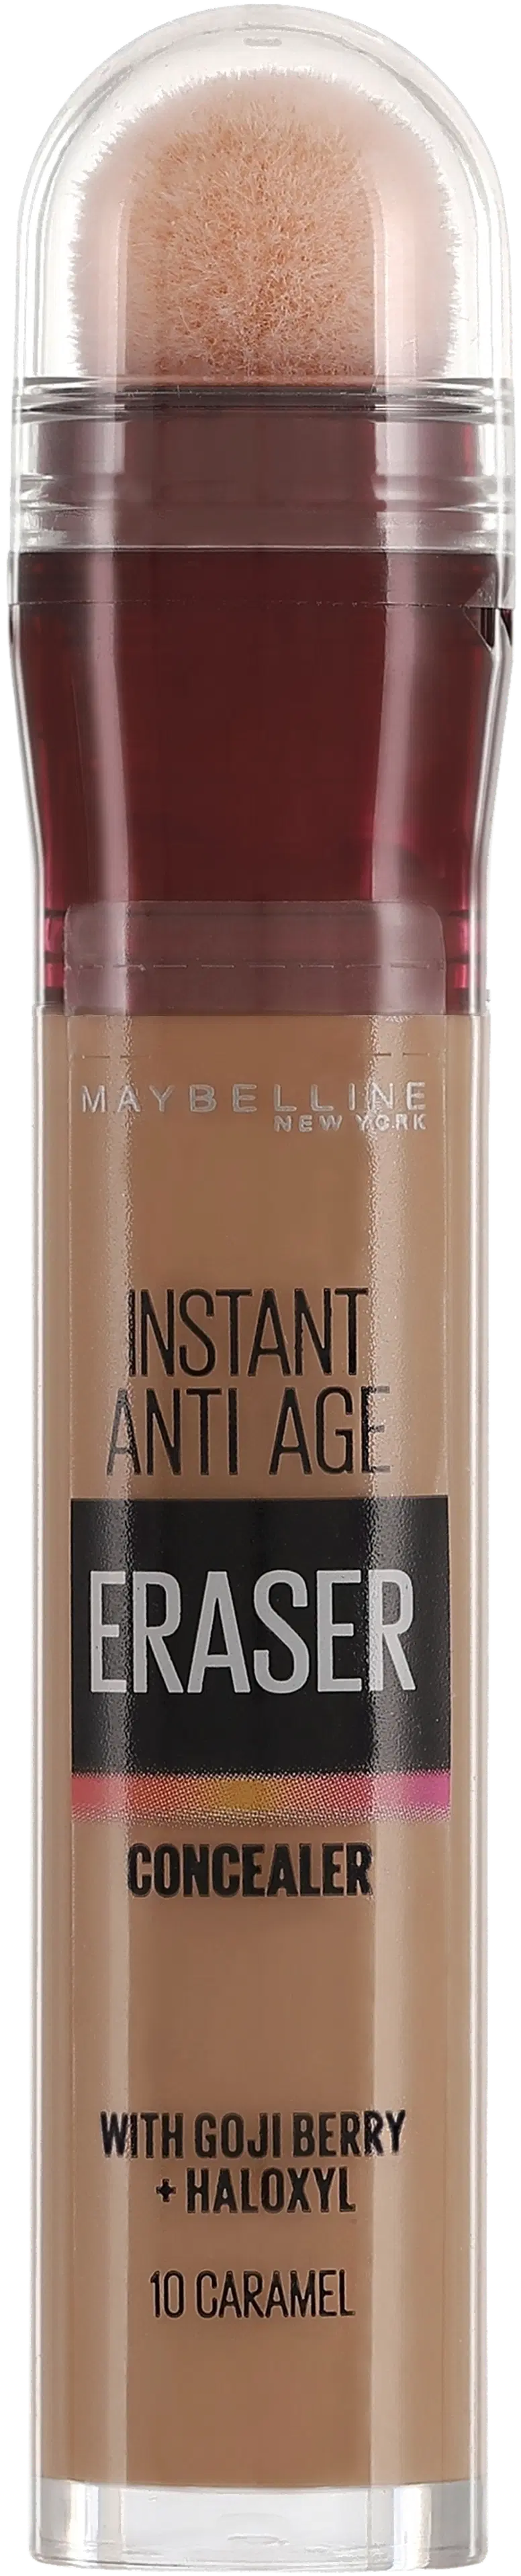 Maybelline New York Instant Anti Age Eraser 10 Caramel peitevoide 6,8ml